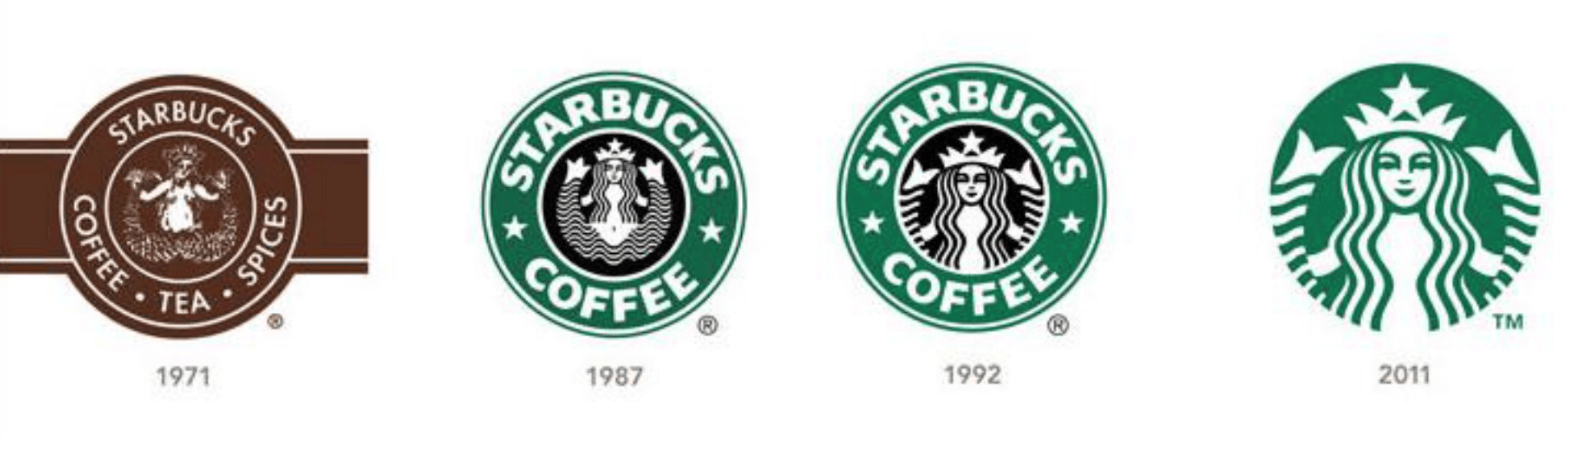 starbucks' brand and logo evolution